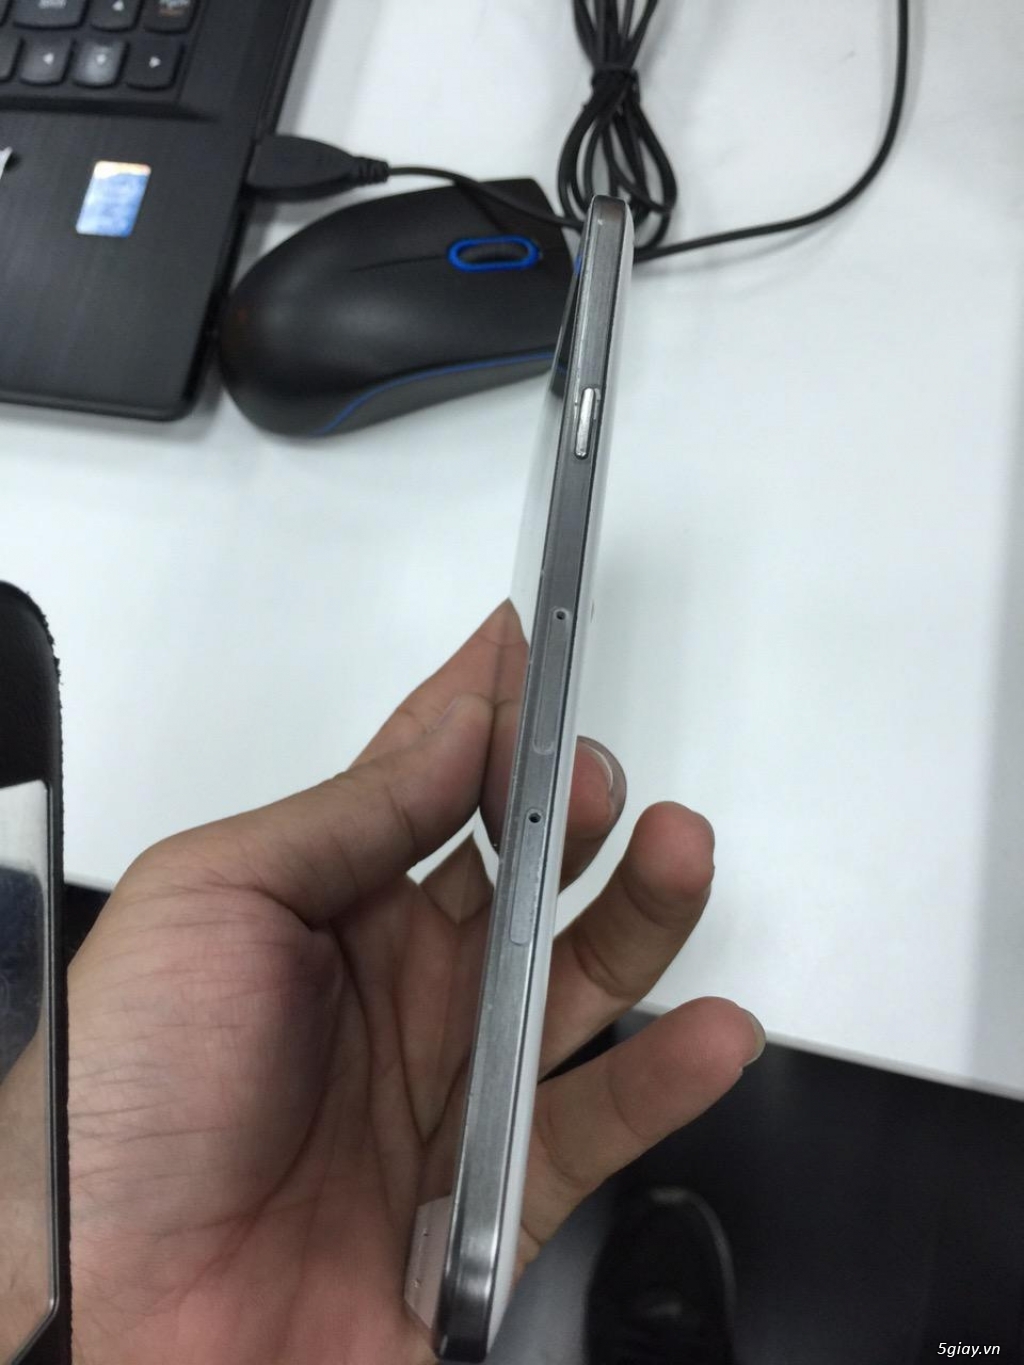 Samsung E7 98% chưa sửa chữa - 4